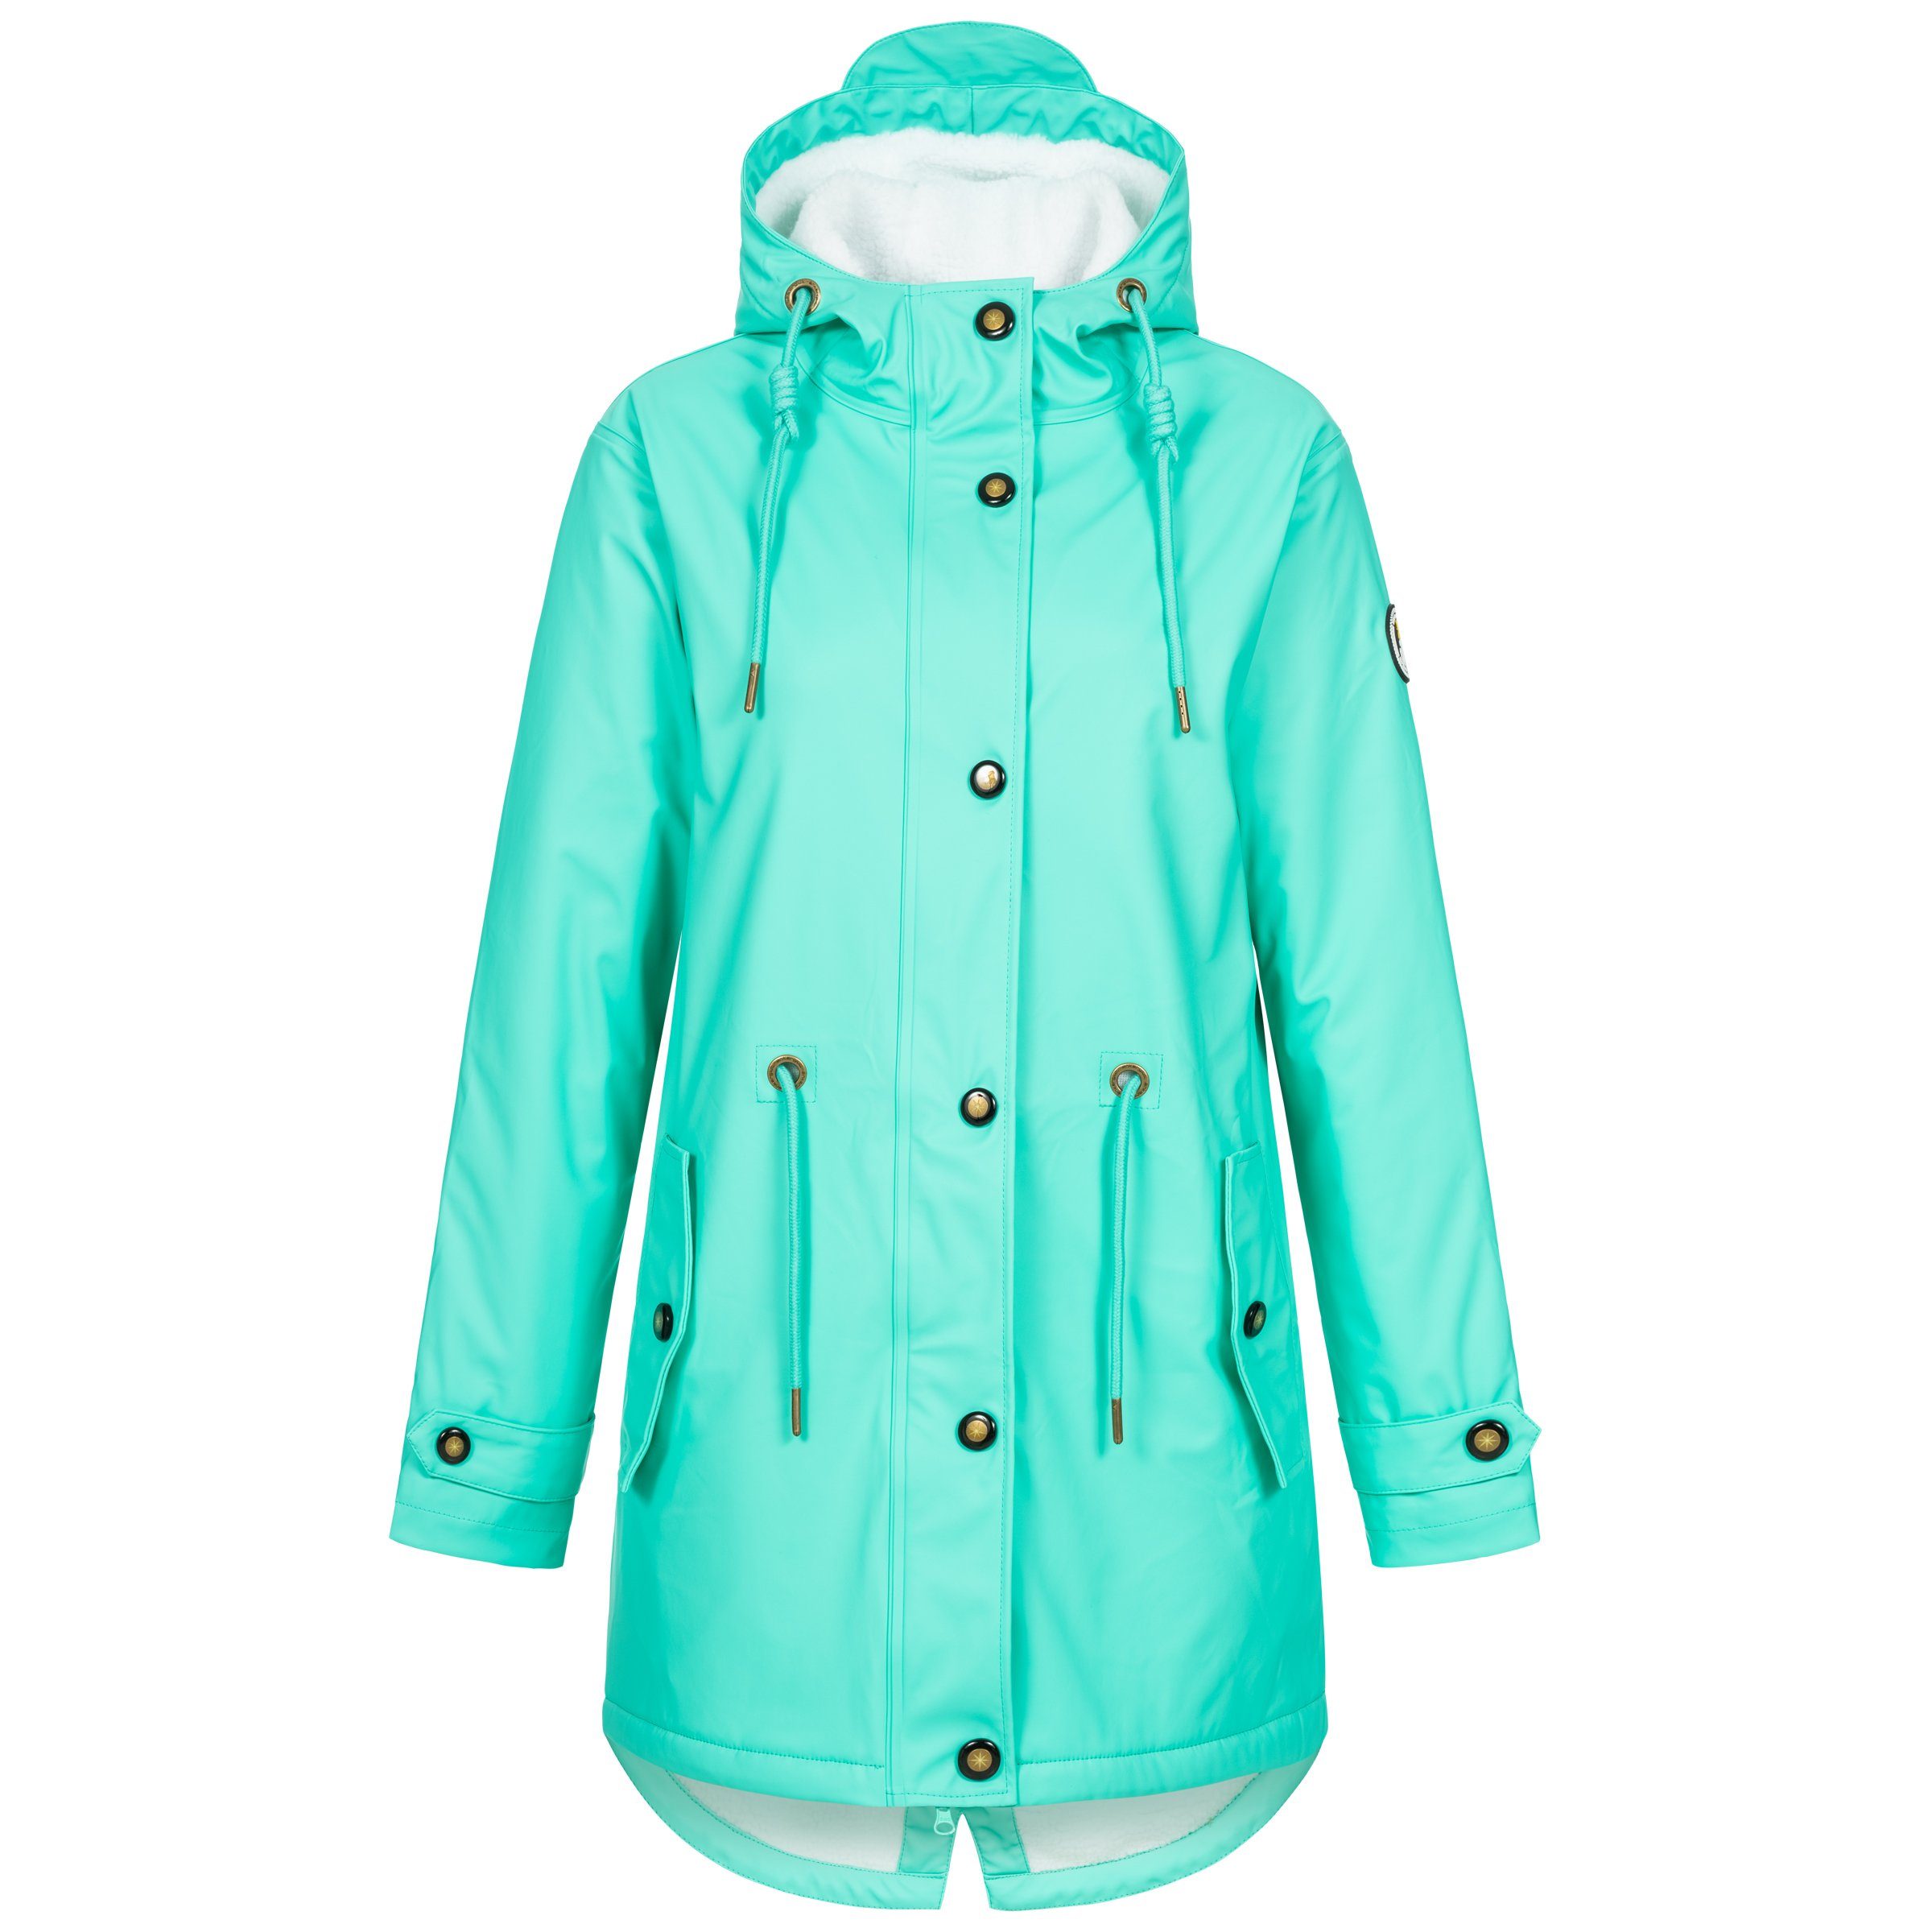 DEPROC Active Regenjacke auch ANKERGLUT & Großen turquoise Größen WOMEN CS Longjacket erhältlich #ankergluttraum in NEW Regenjacke